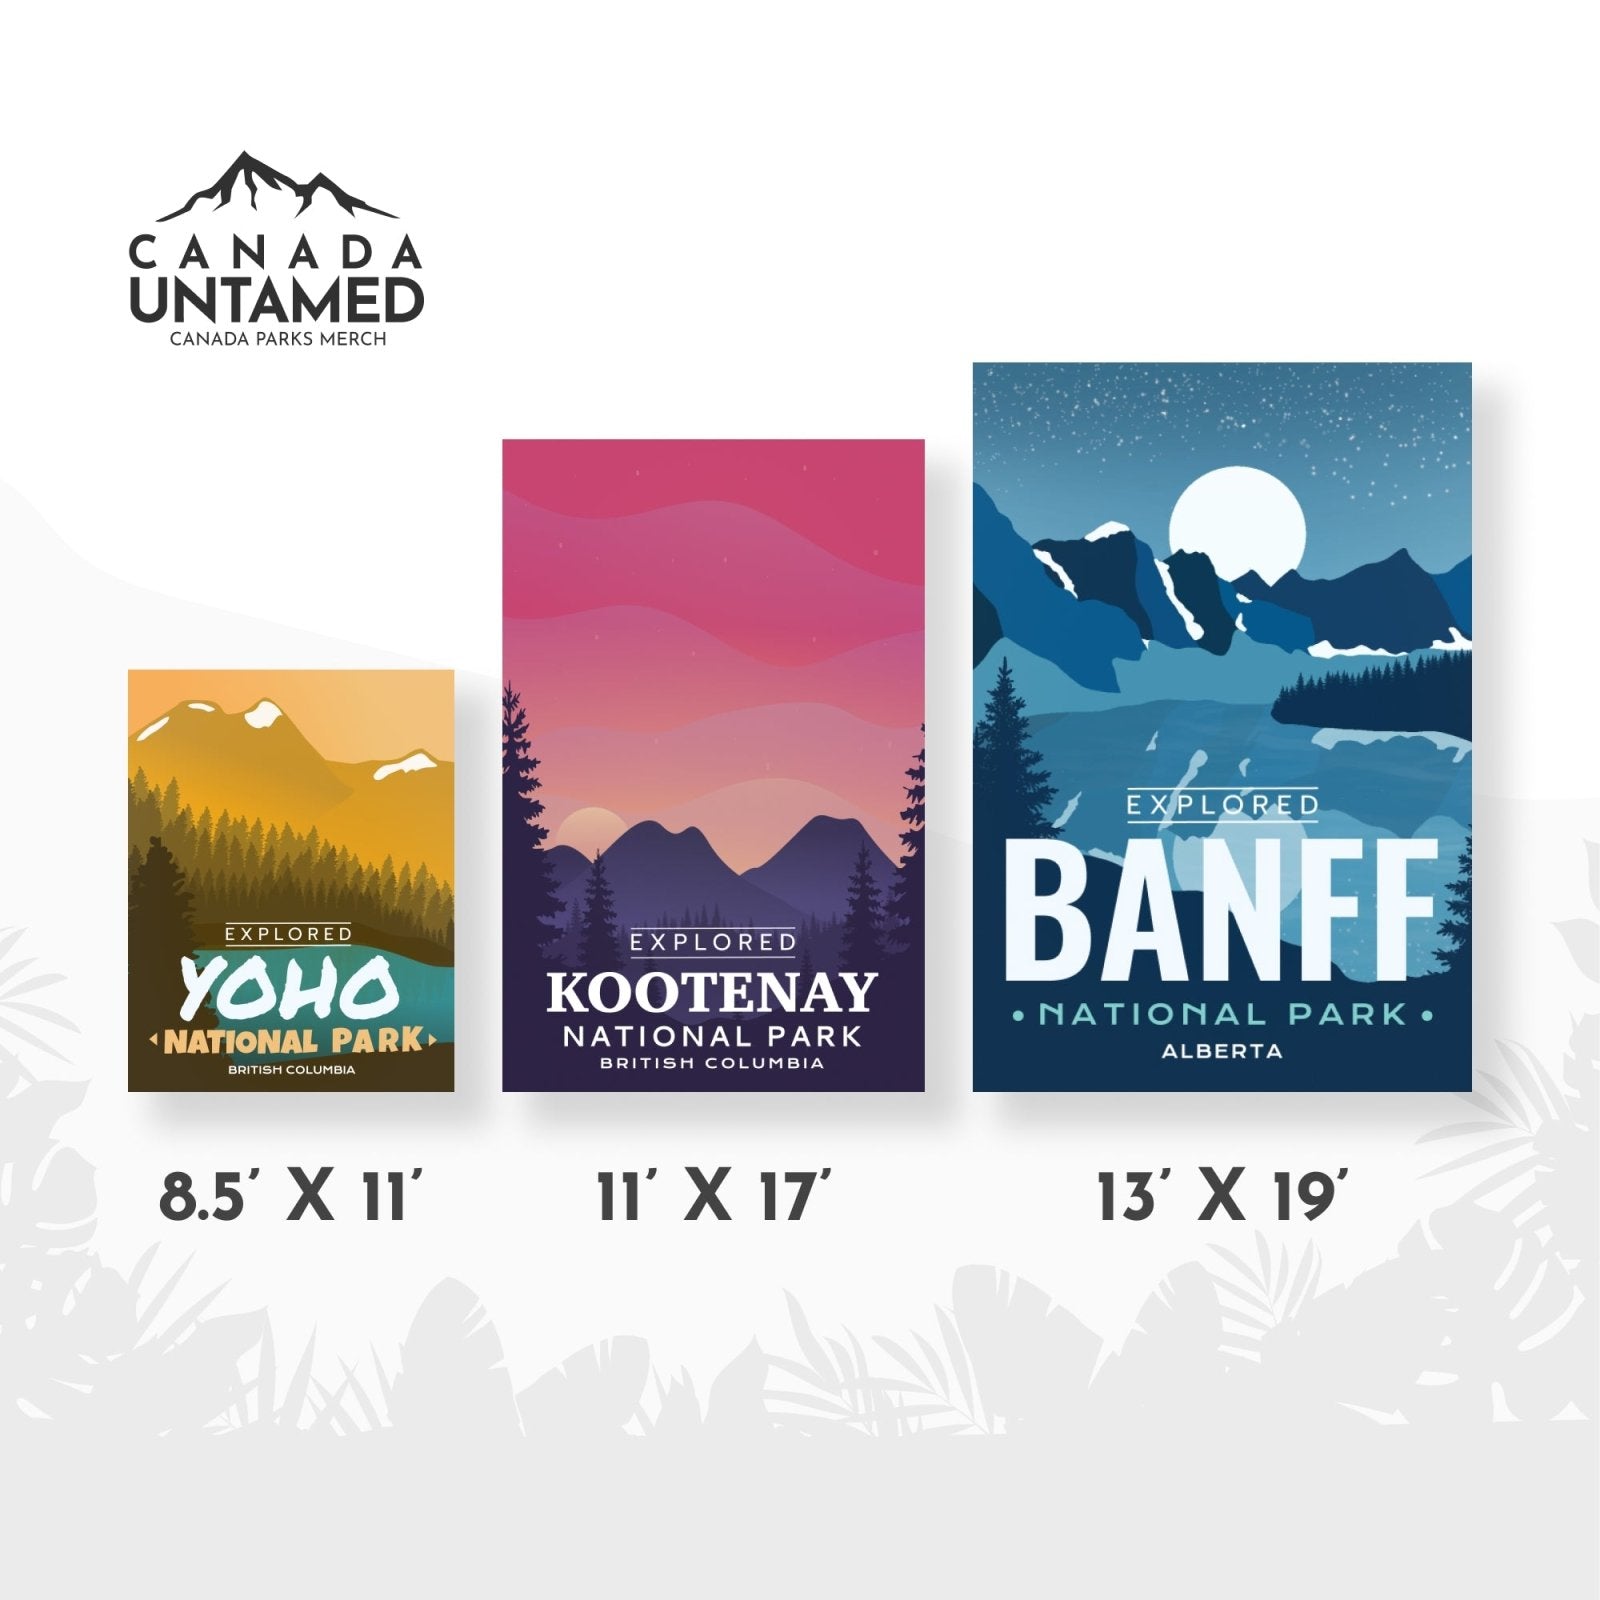 Park – Canada Untamed Poster Banff \'Explored\' National